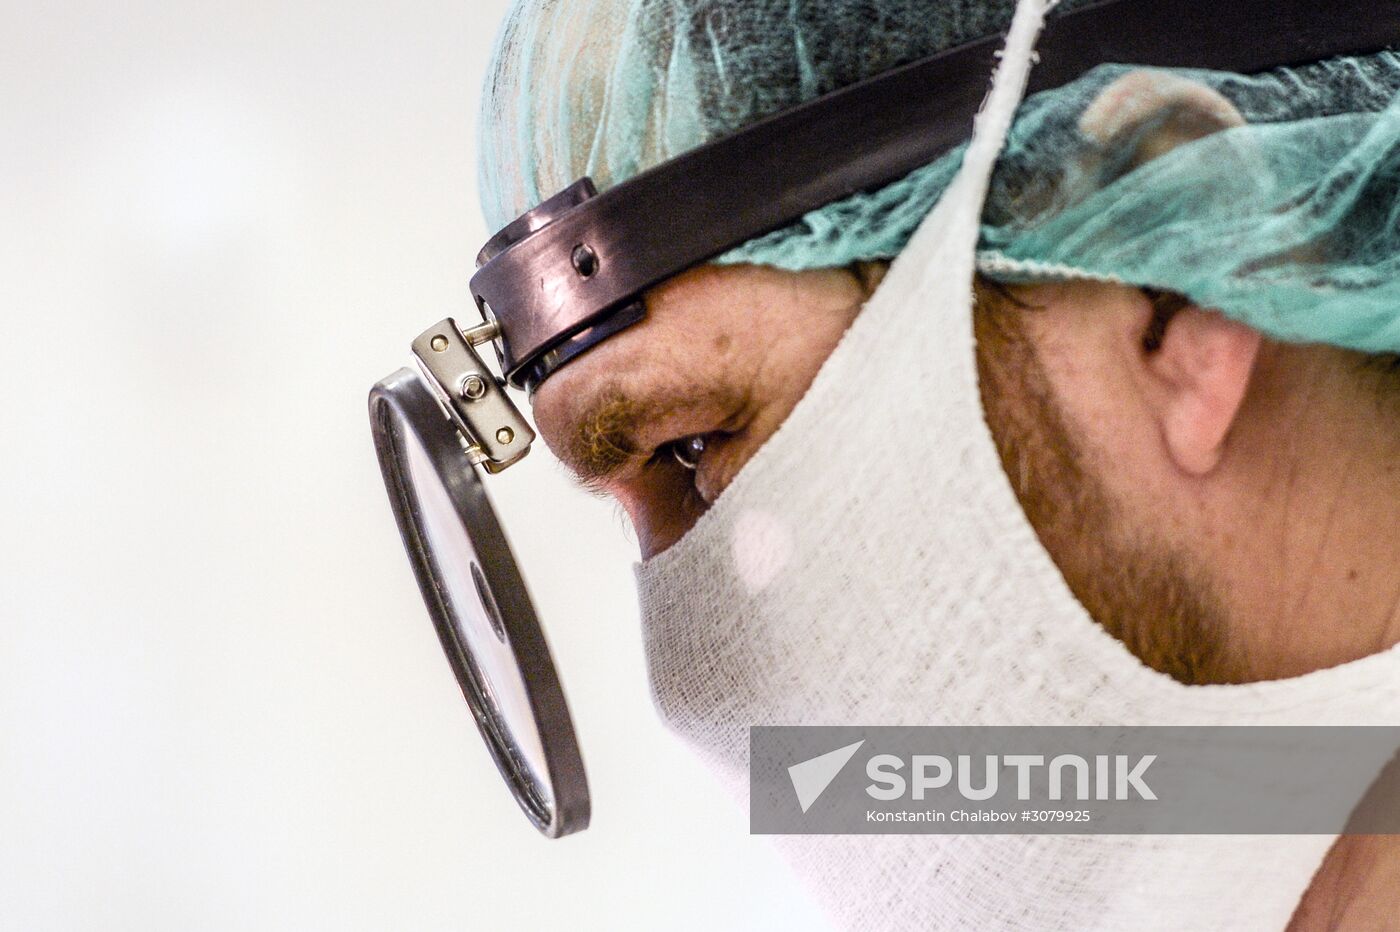 ENT surgeon from Veliky Novgorod